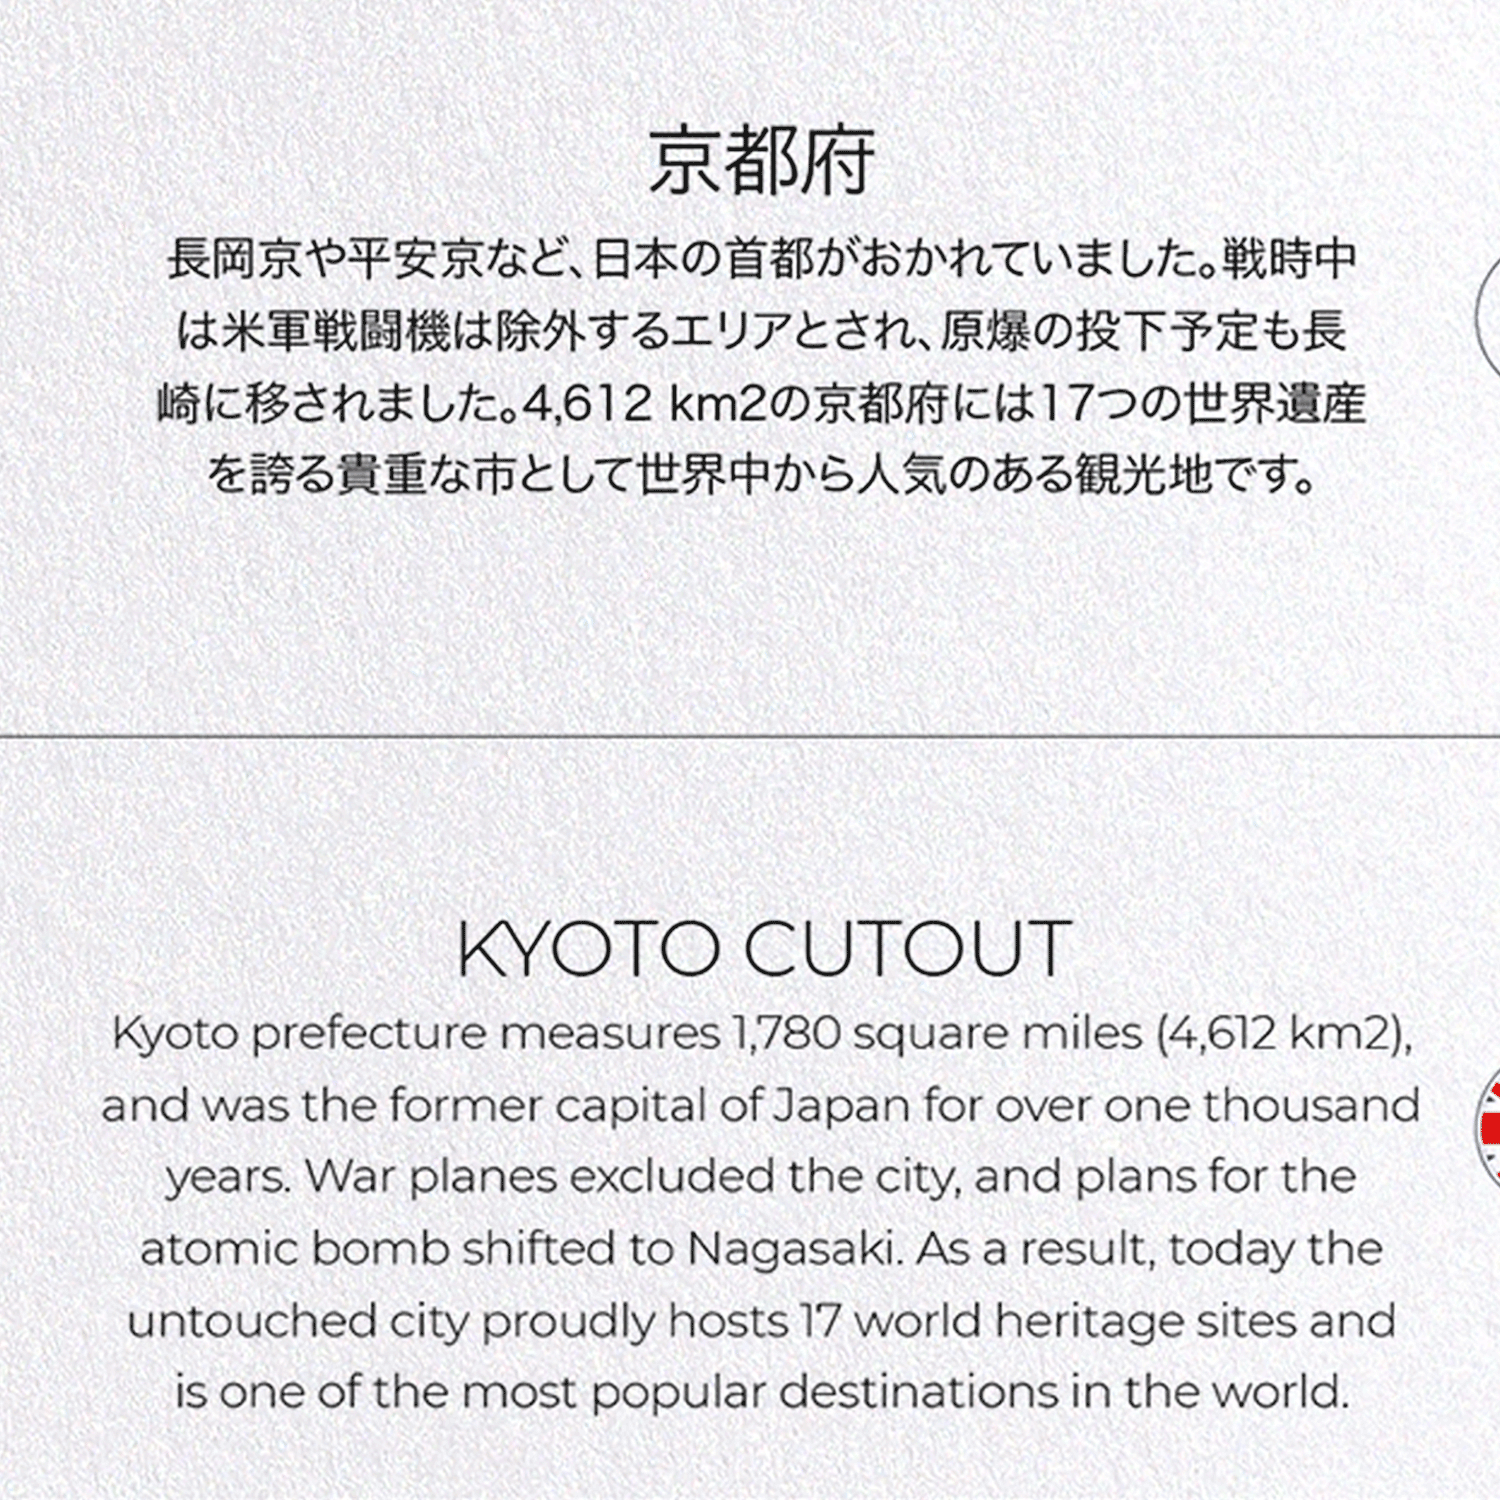 KYOTO CUTOUT